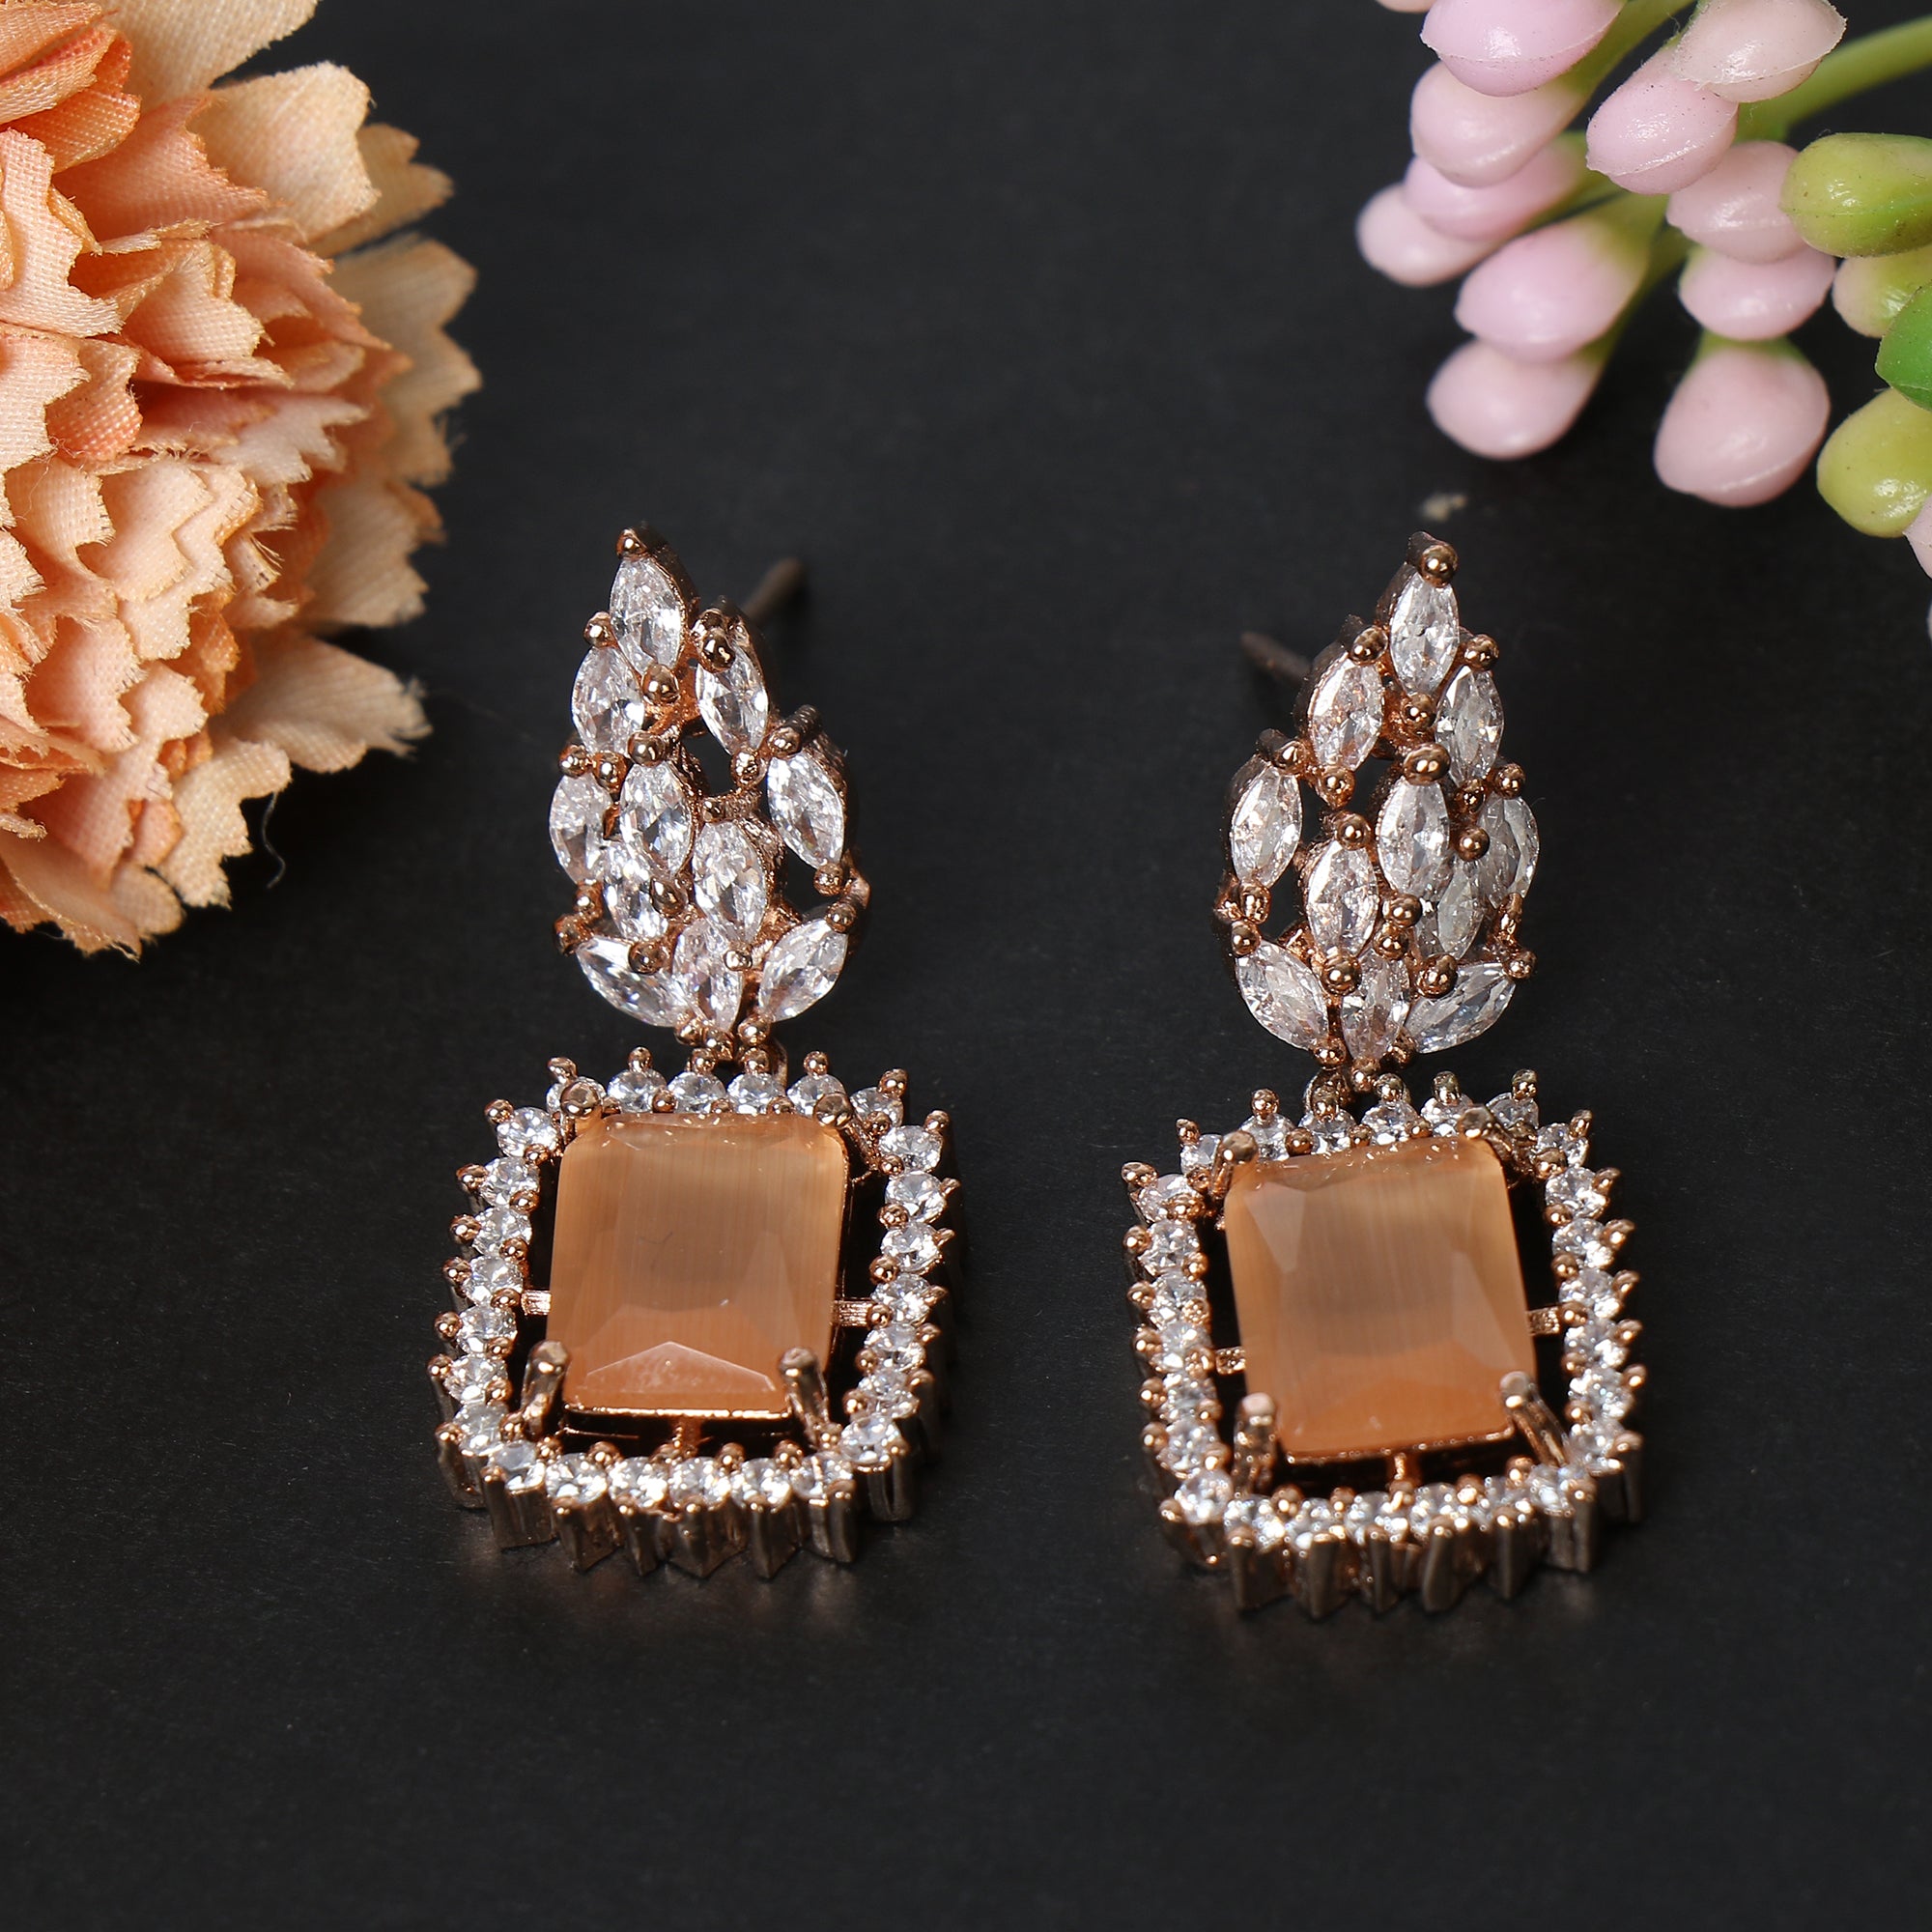 3-Stone Diamond Stud Earrings - SOLD - Sholdt Jewelry Design